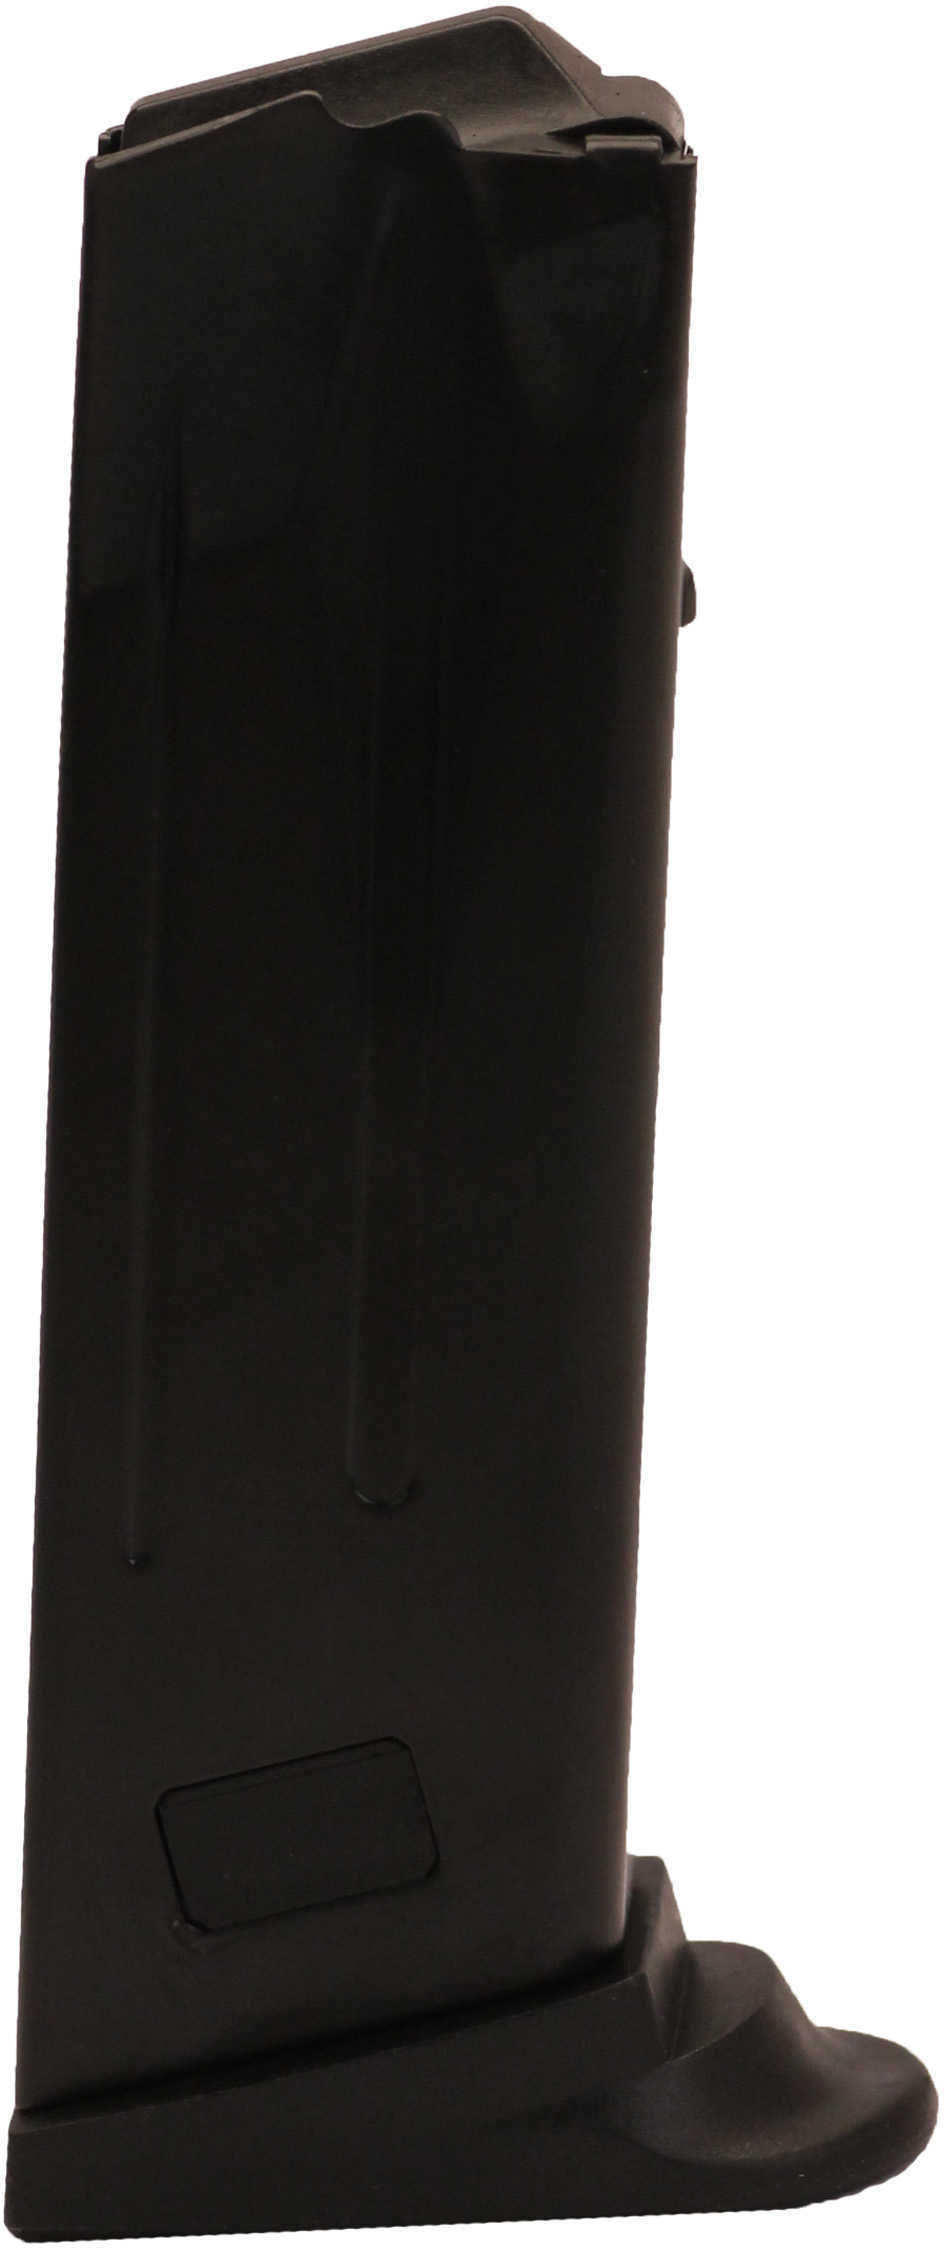 HK Magazine P2000/USP Compact 357 Sig Sauer 10 Round Polymer Black Finish 217819S